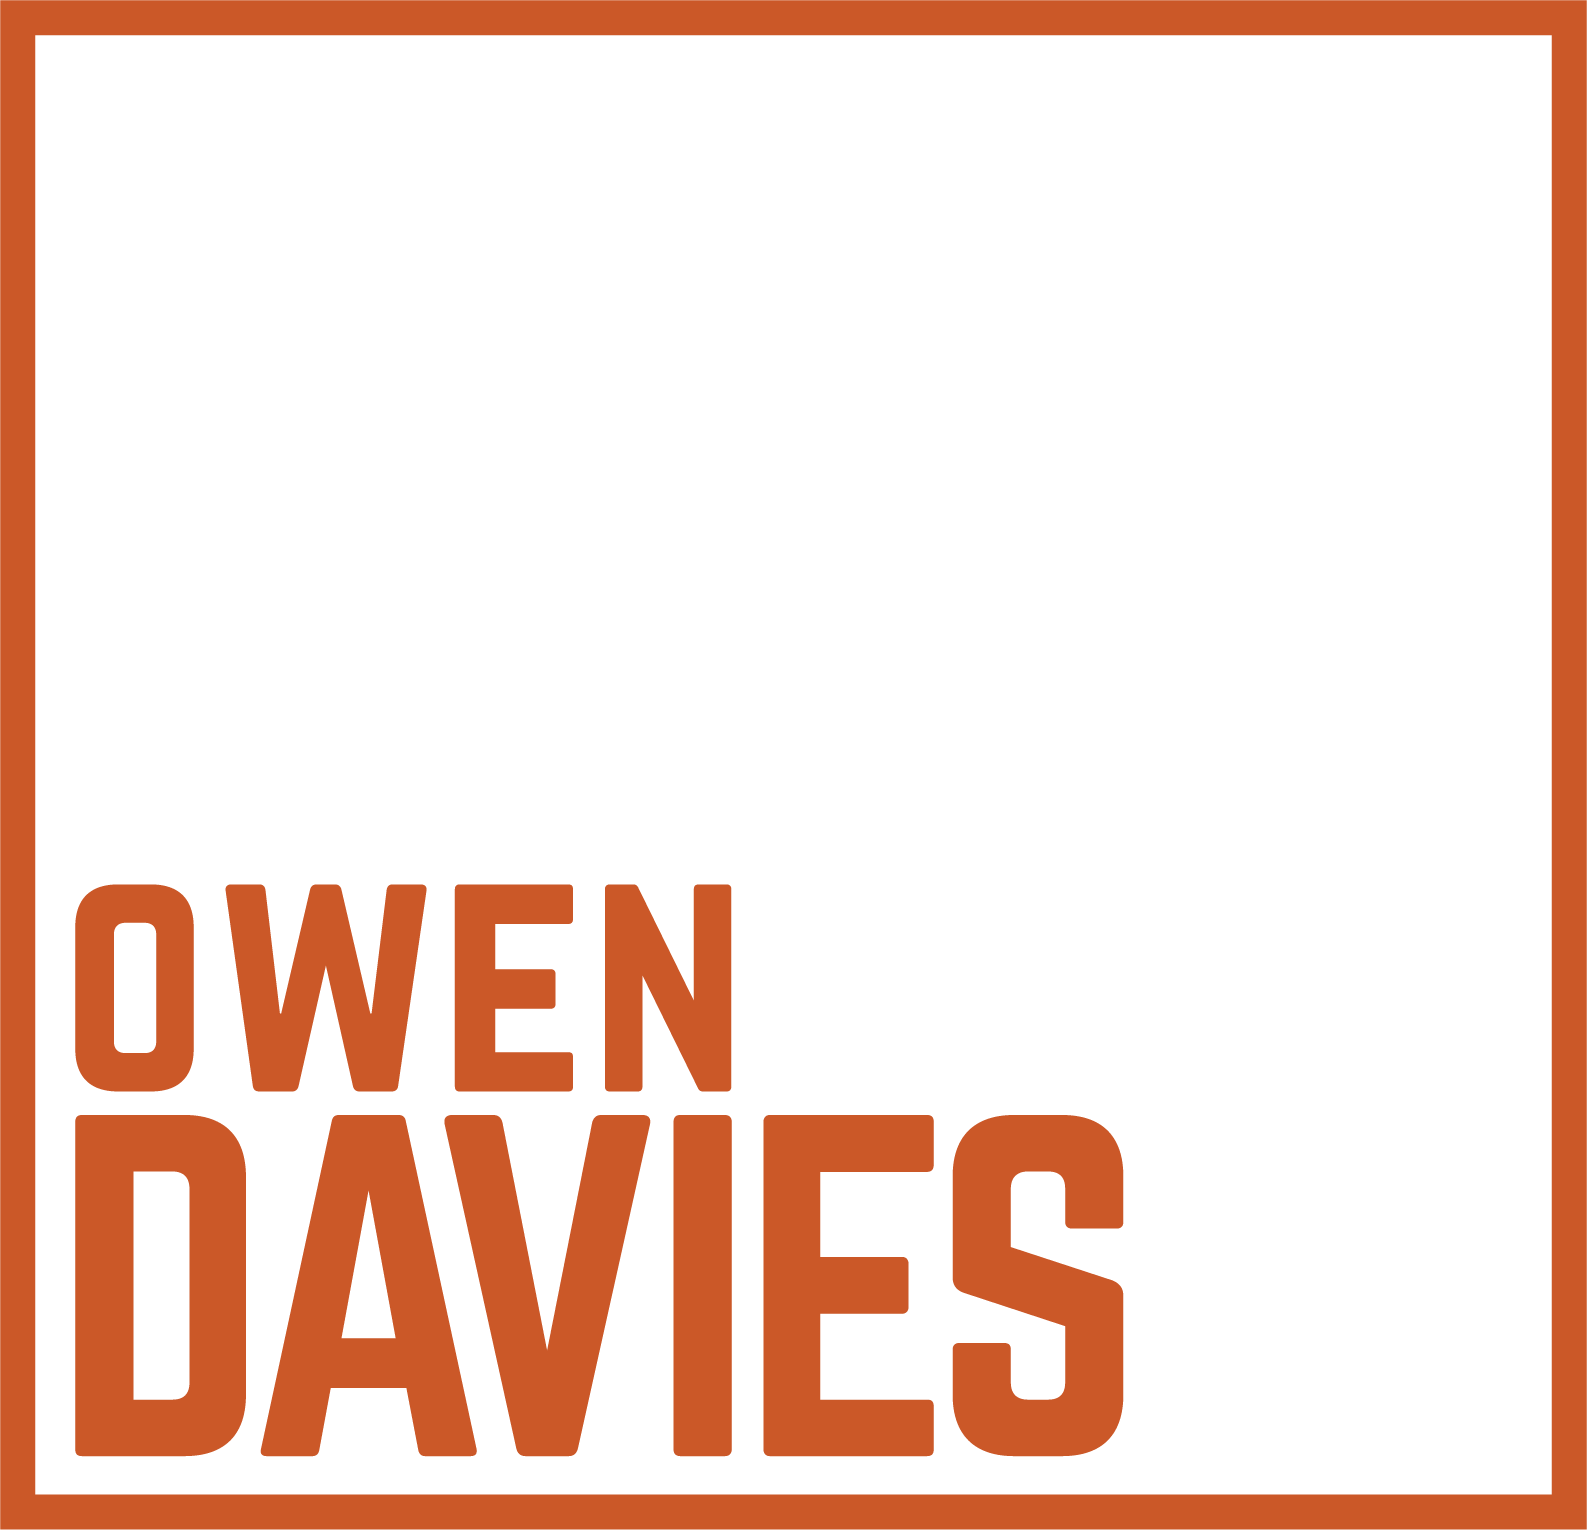 Owen Davies - Commercial Photographer